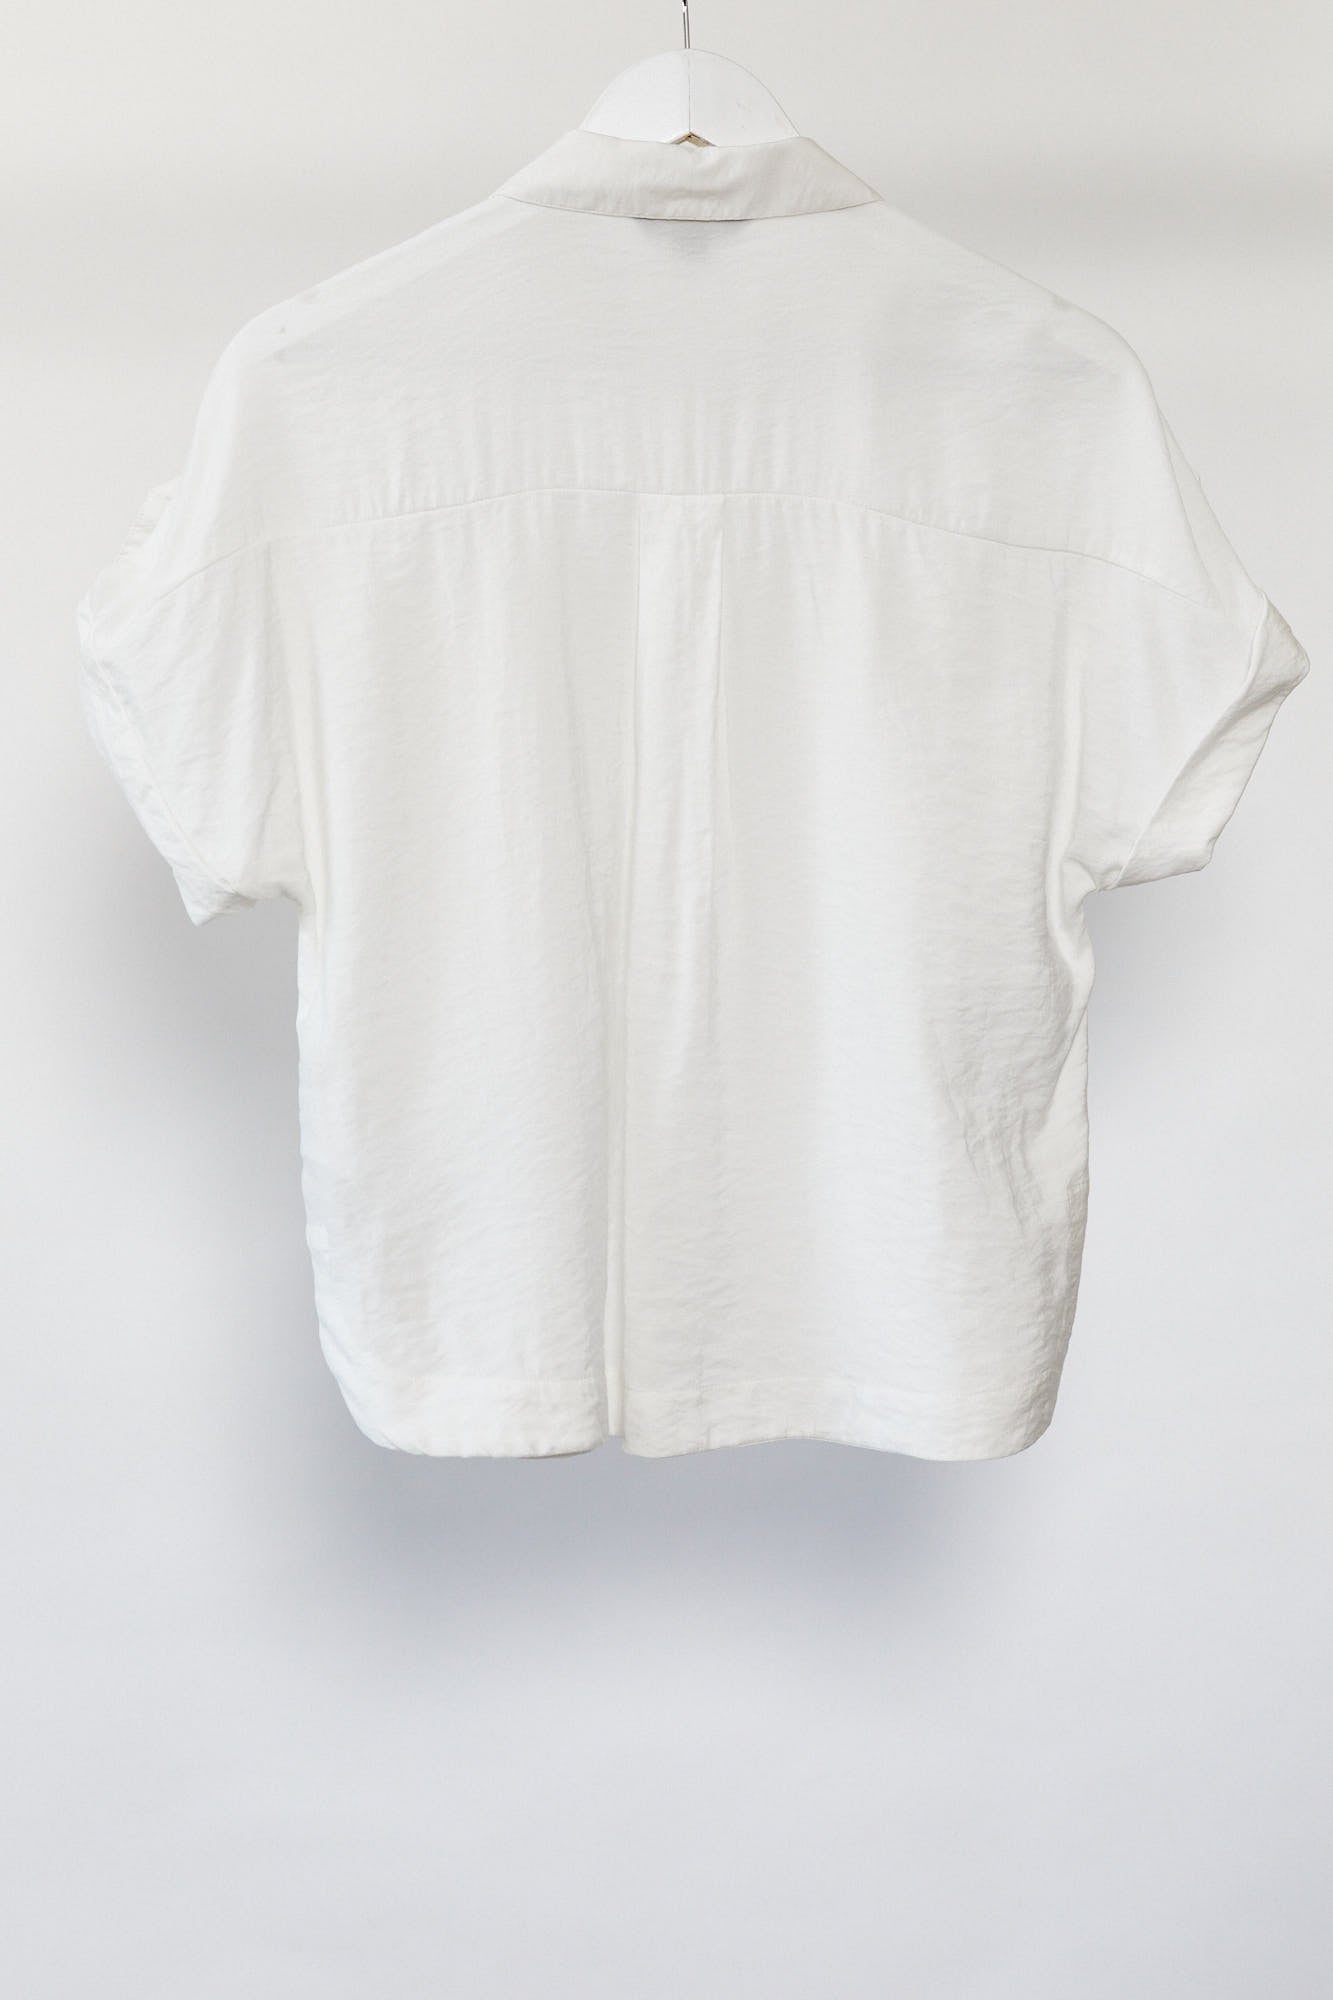 Womens Whistles white short sleeve shirt size 10